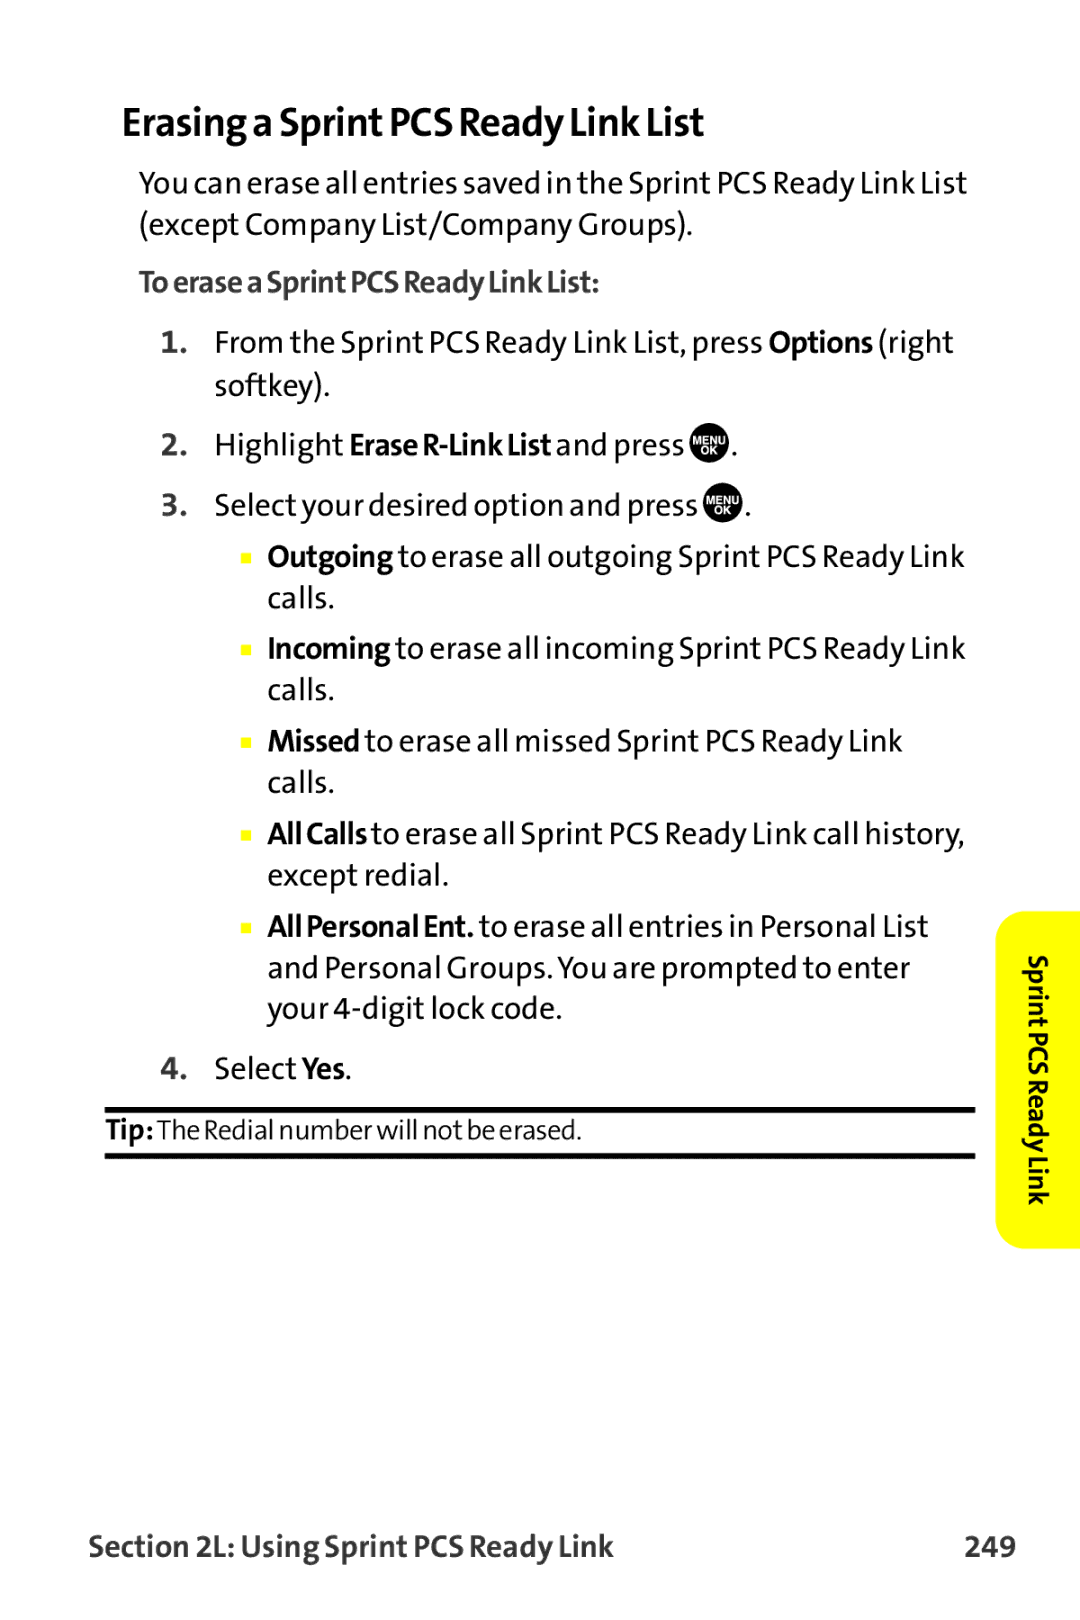 Sanyo MM-9000 manual Erasinga SprintPCS Ready Link List, ToeraseaSprintPCSReadyLinkList, Using Sprint PCS Ready Link 249 